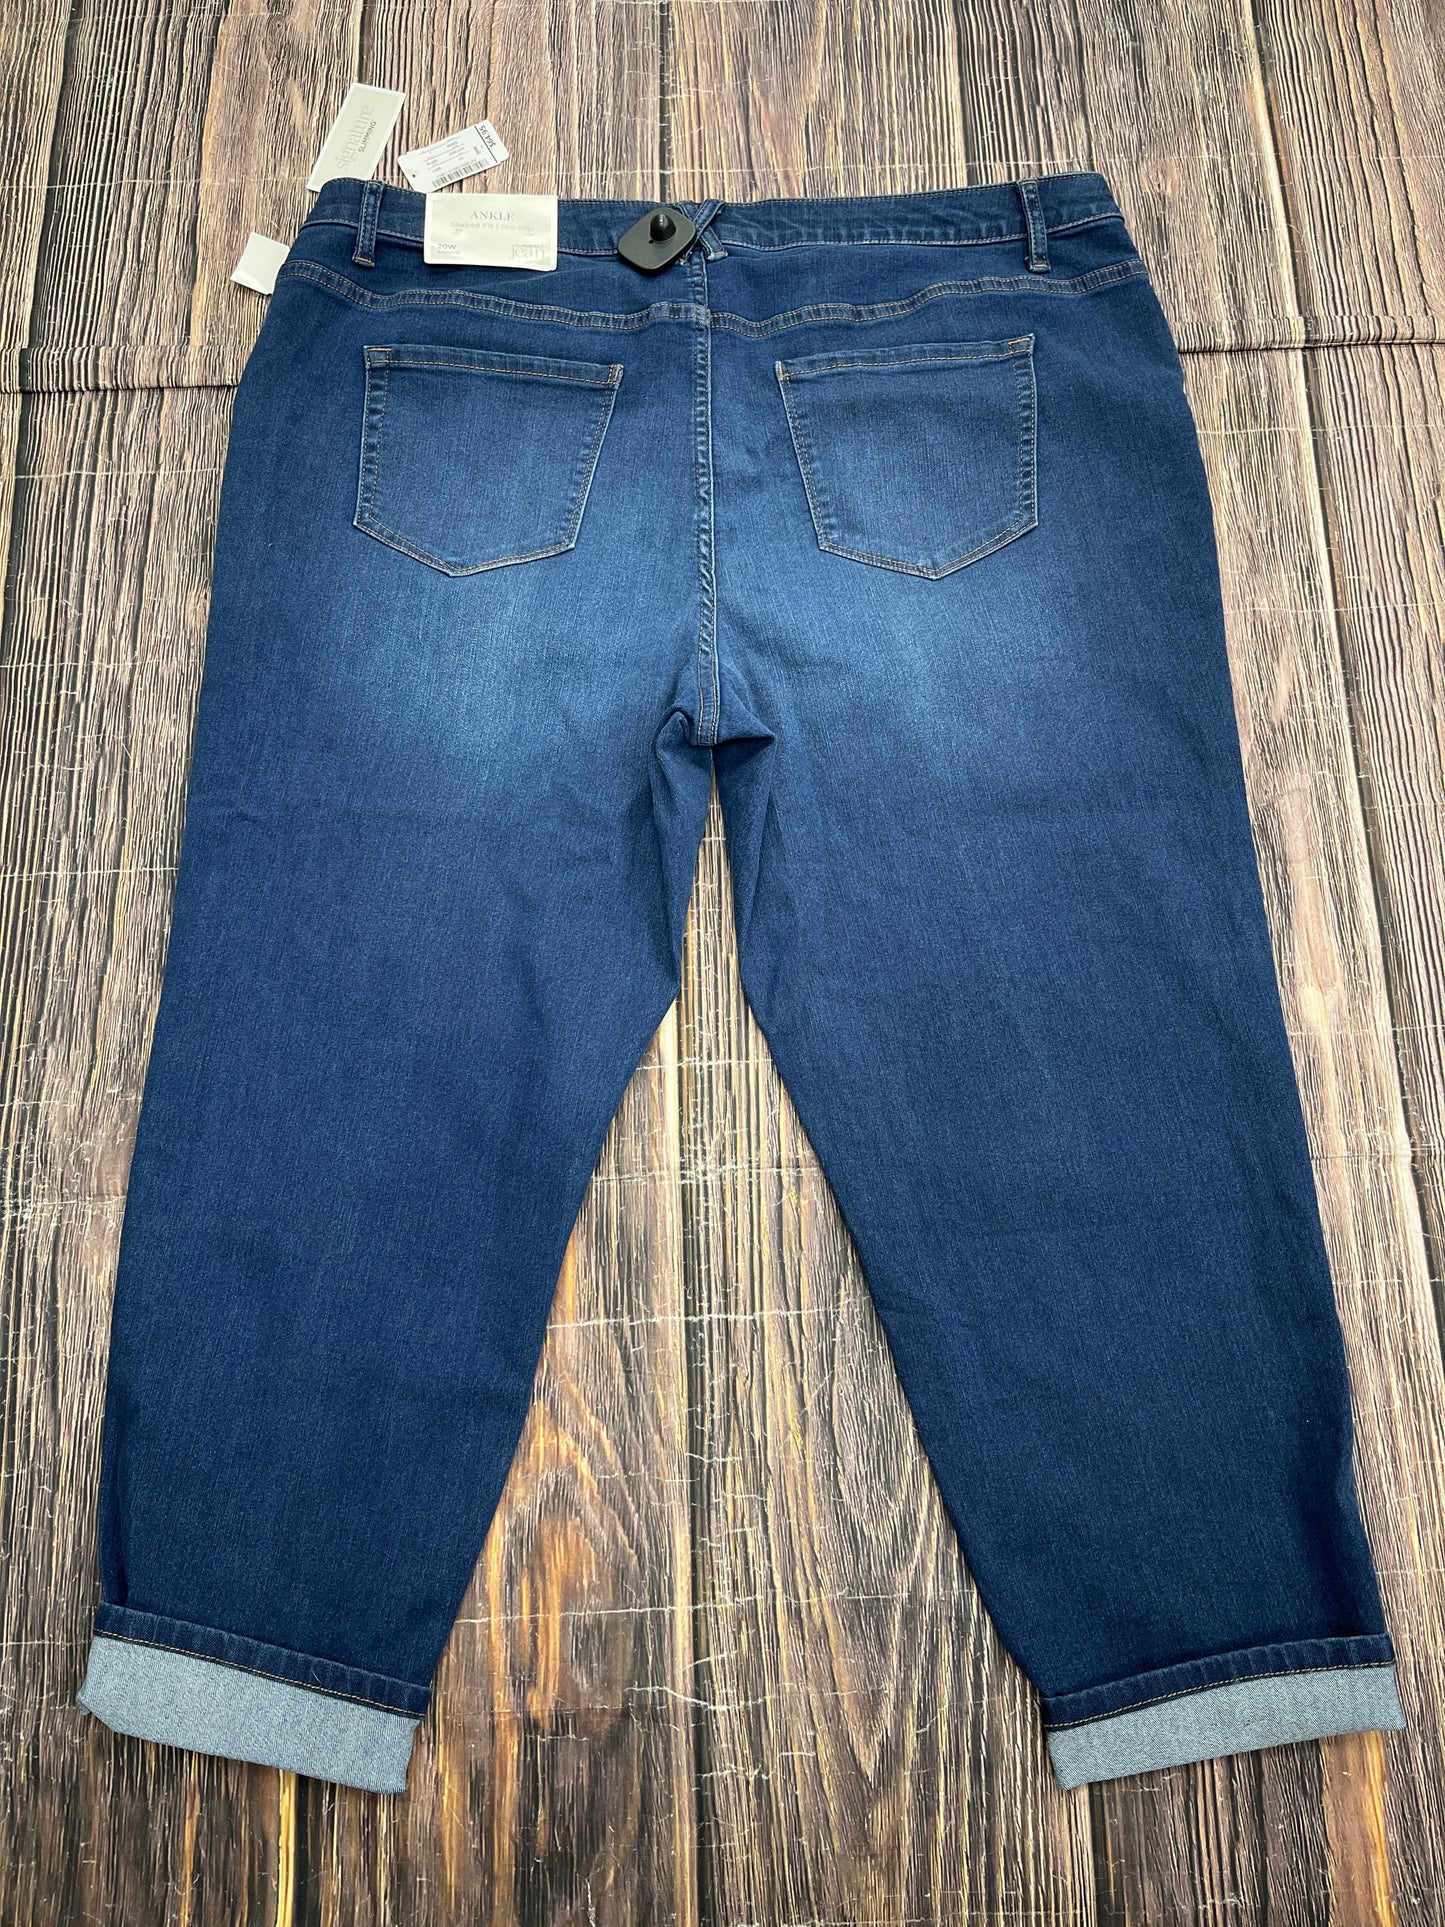 Jeans Cropped By Cj Banks  Size: 20